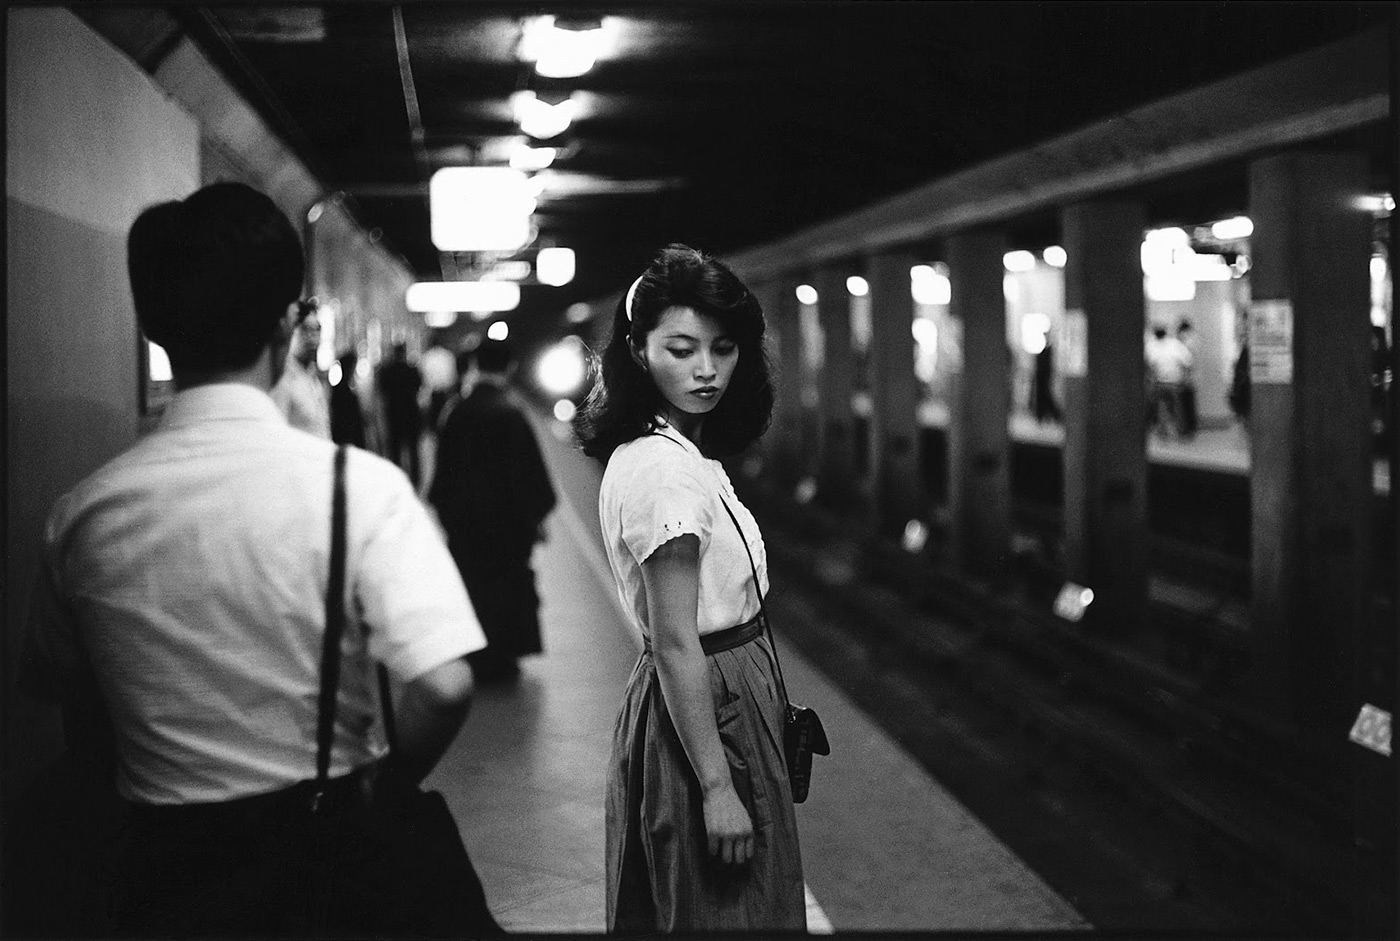 Ed van der Elsken : Waiting for the subway, 1957